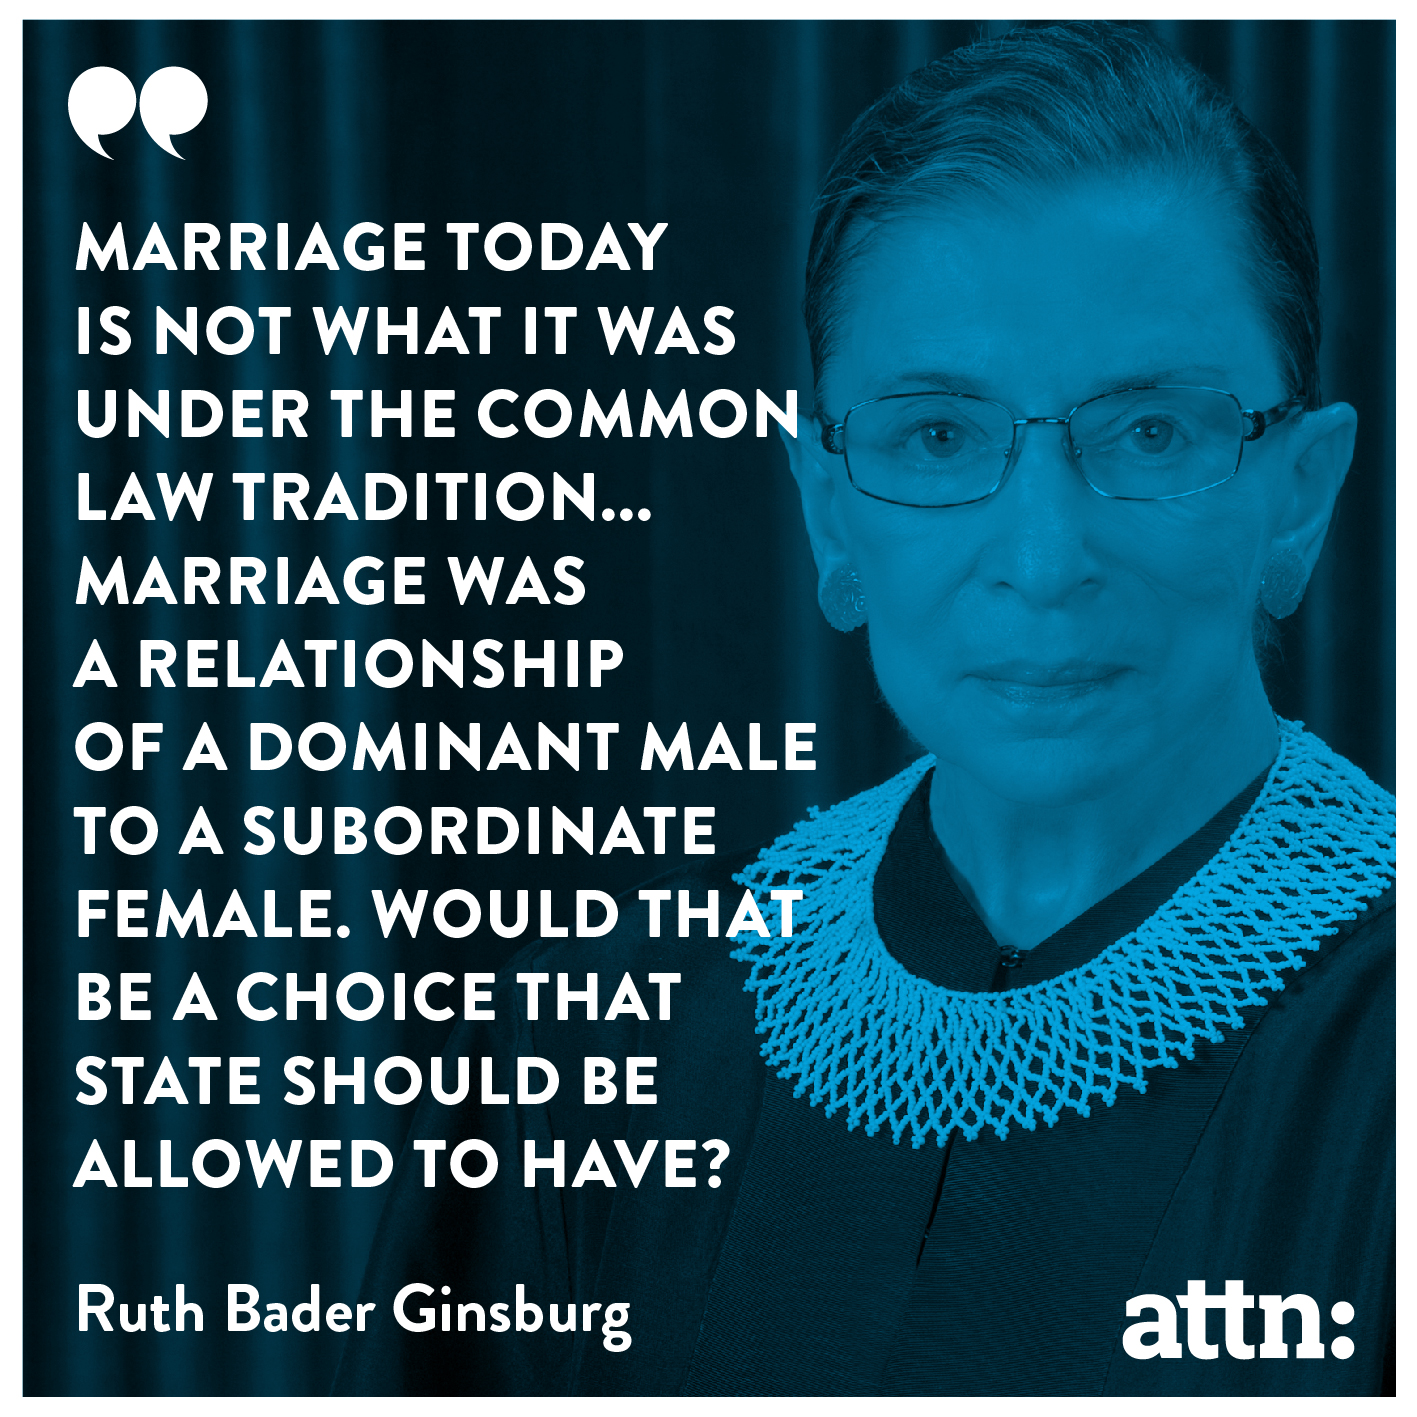 RBG Marriage Equality